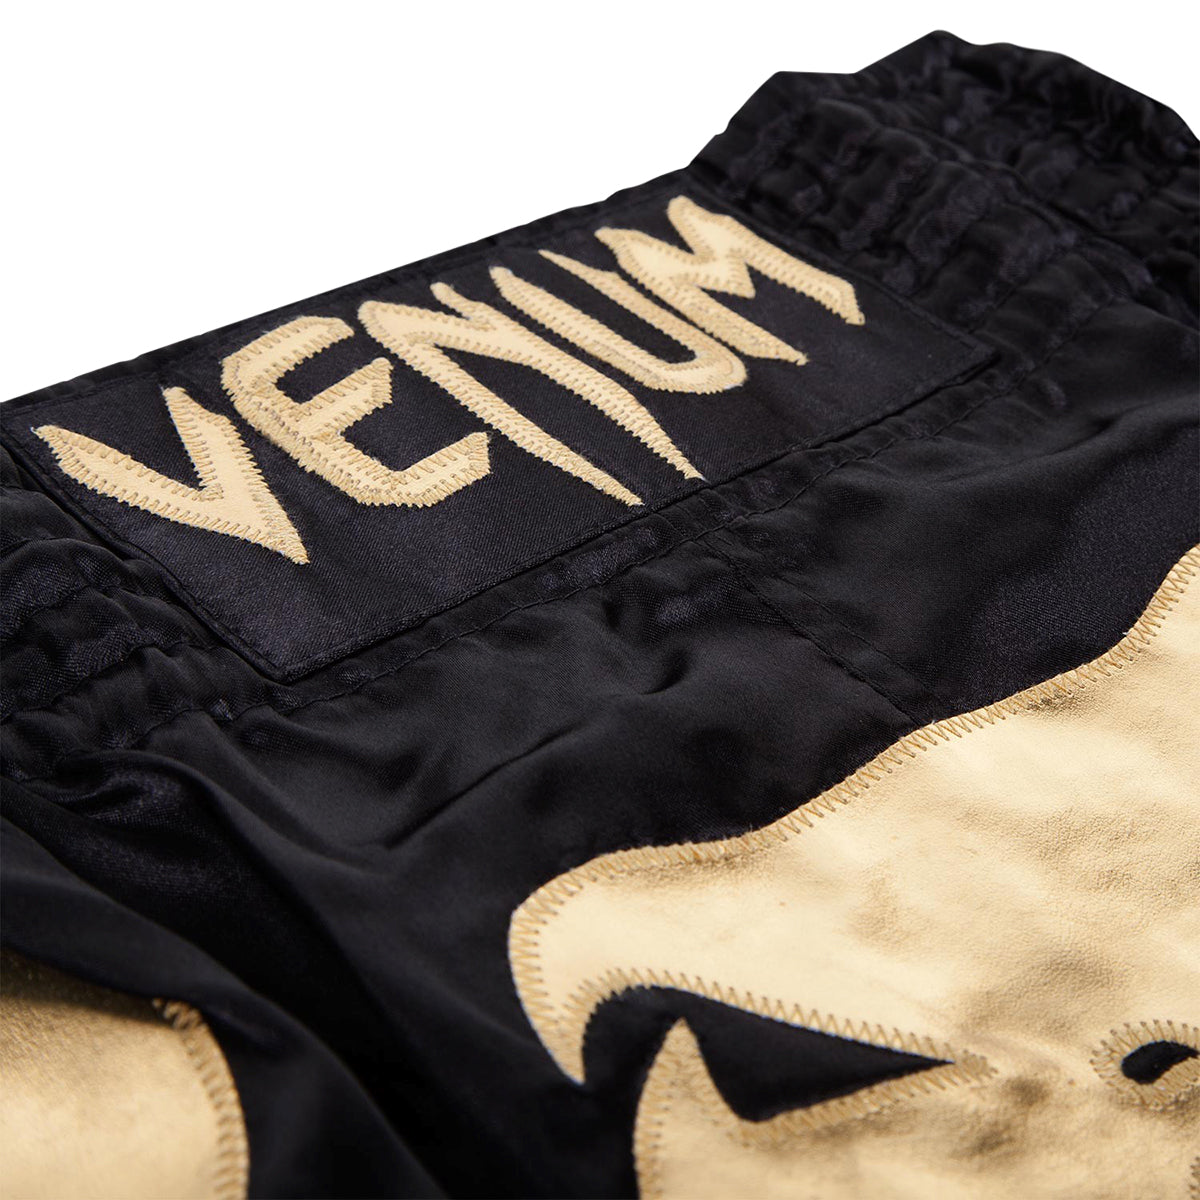 Venum Bangkok Inferno Muay Thai Shorts - Black/Gold Venum